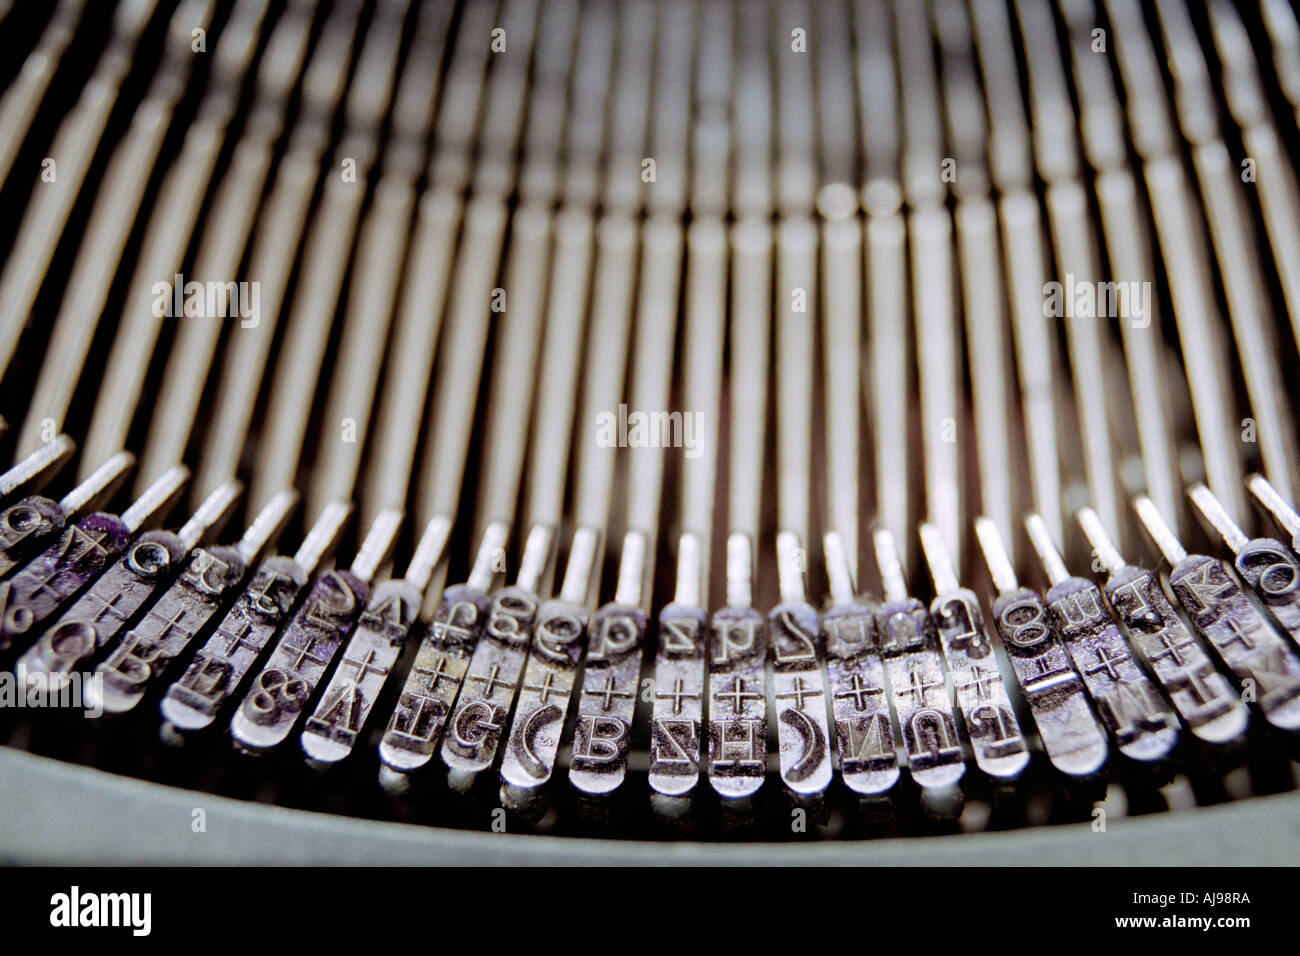 Typewriter keys Stock Photo